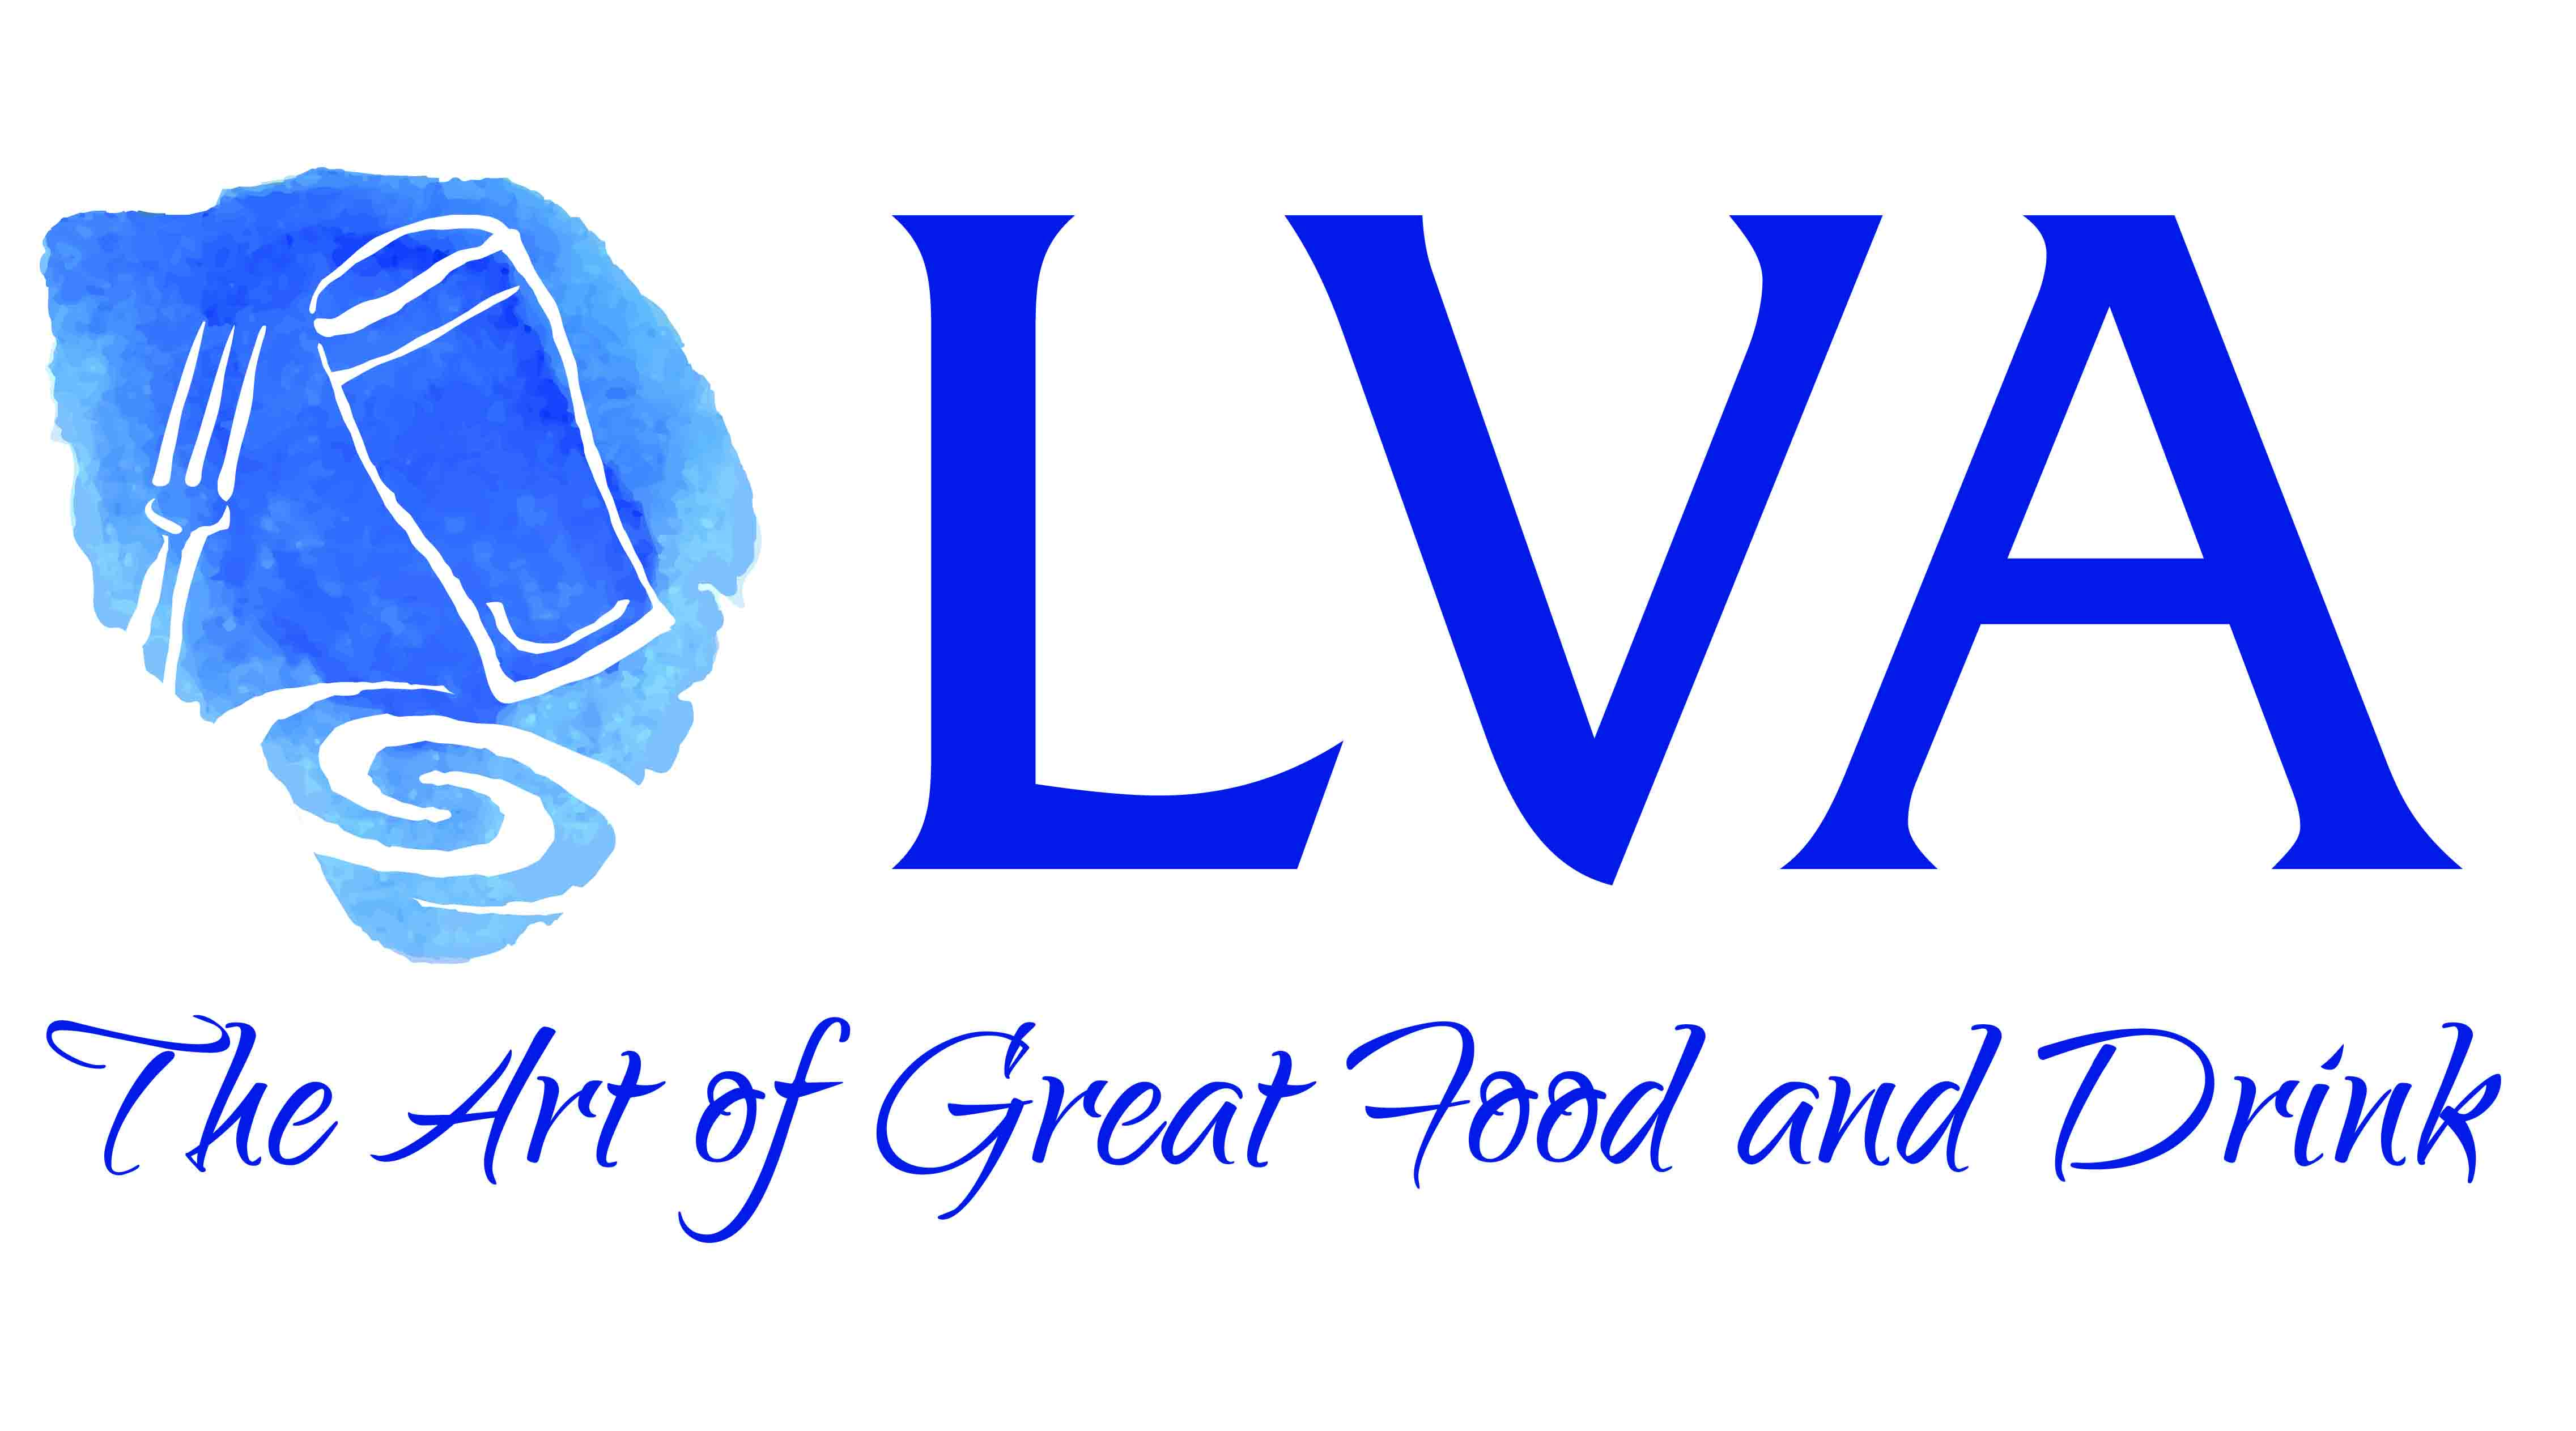 The LVA’s new logo, graphic and strapline.